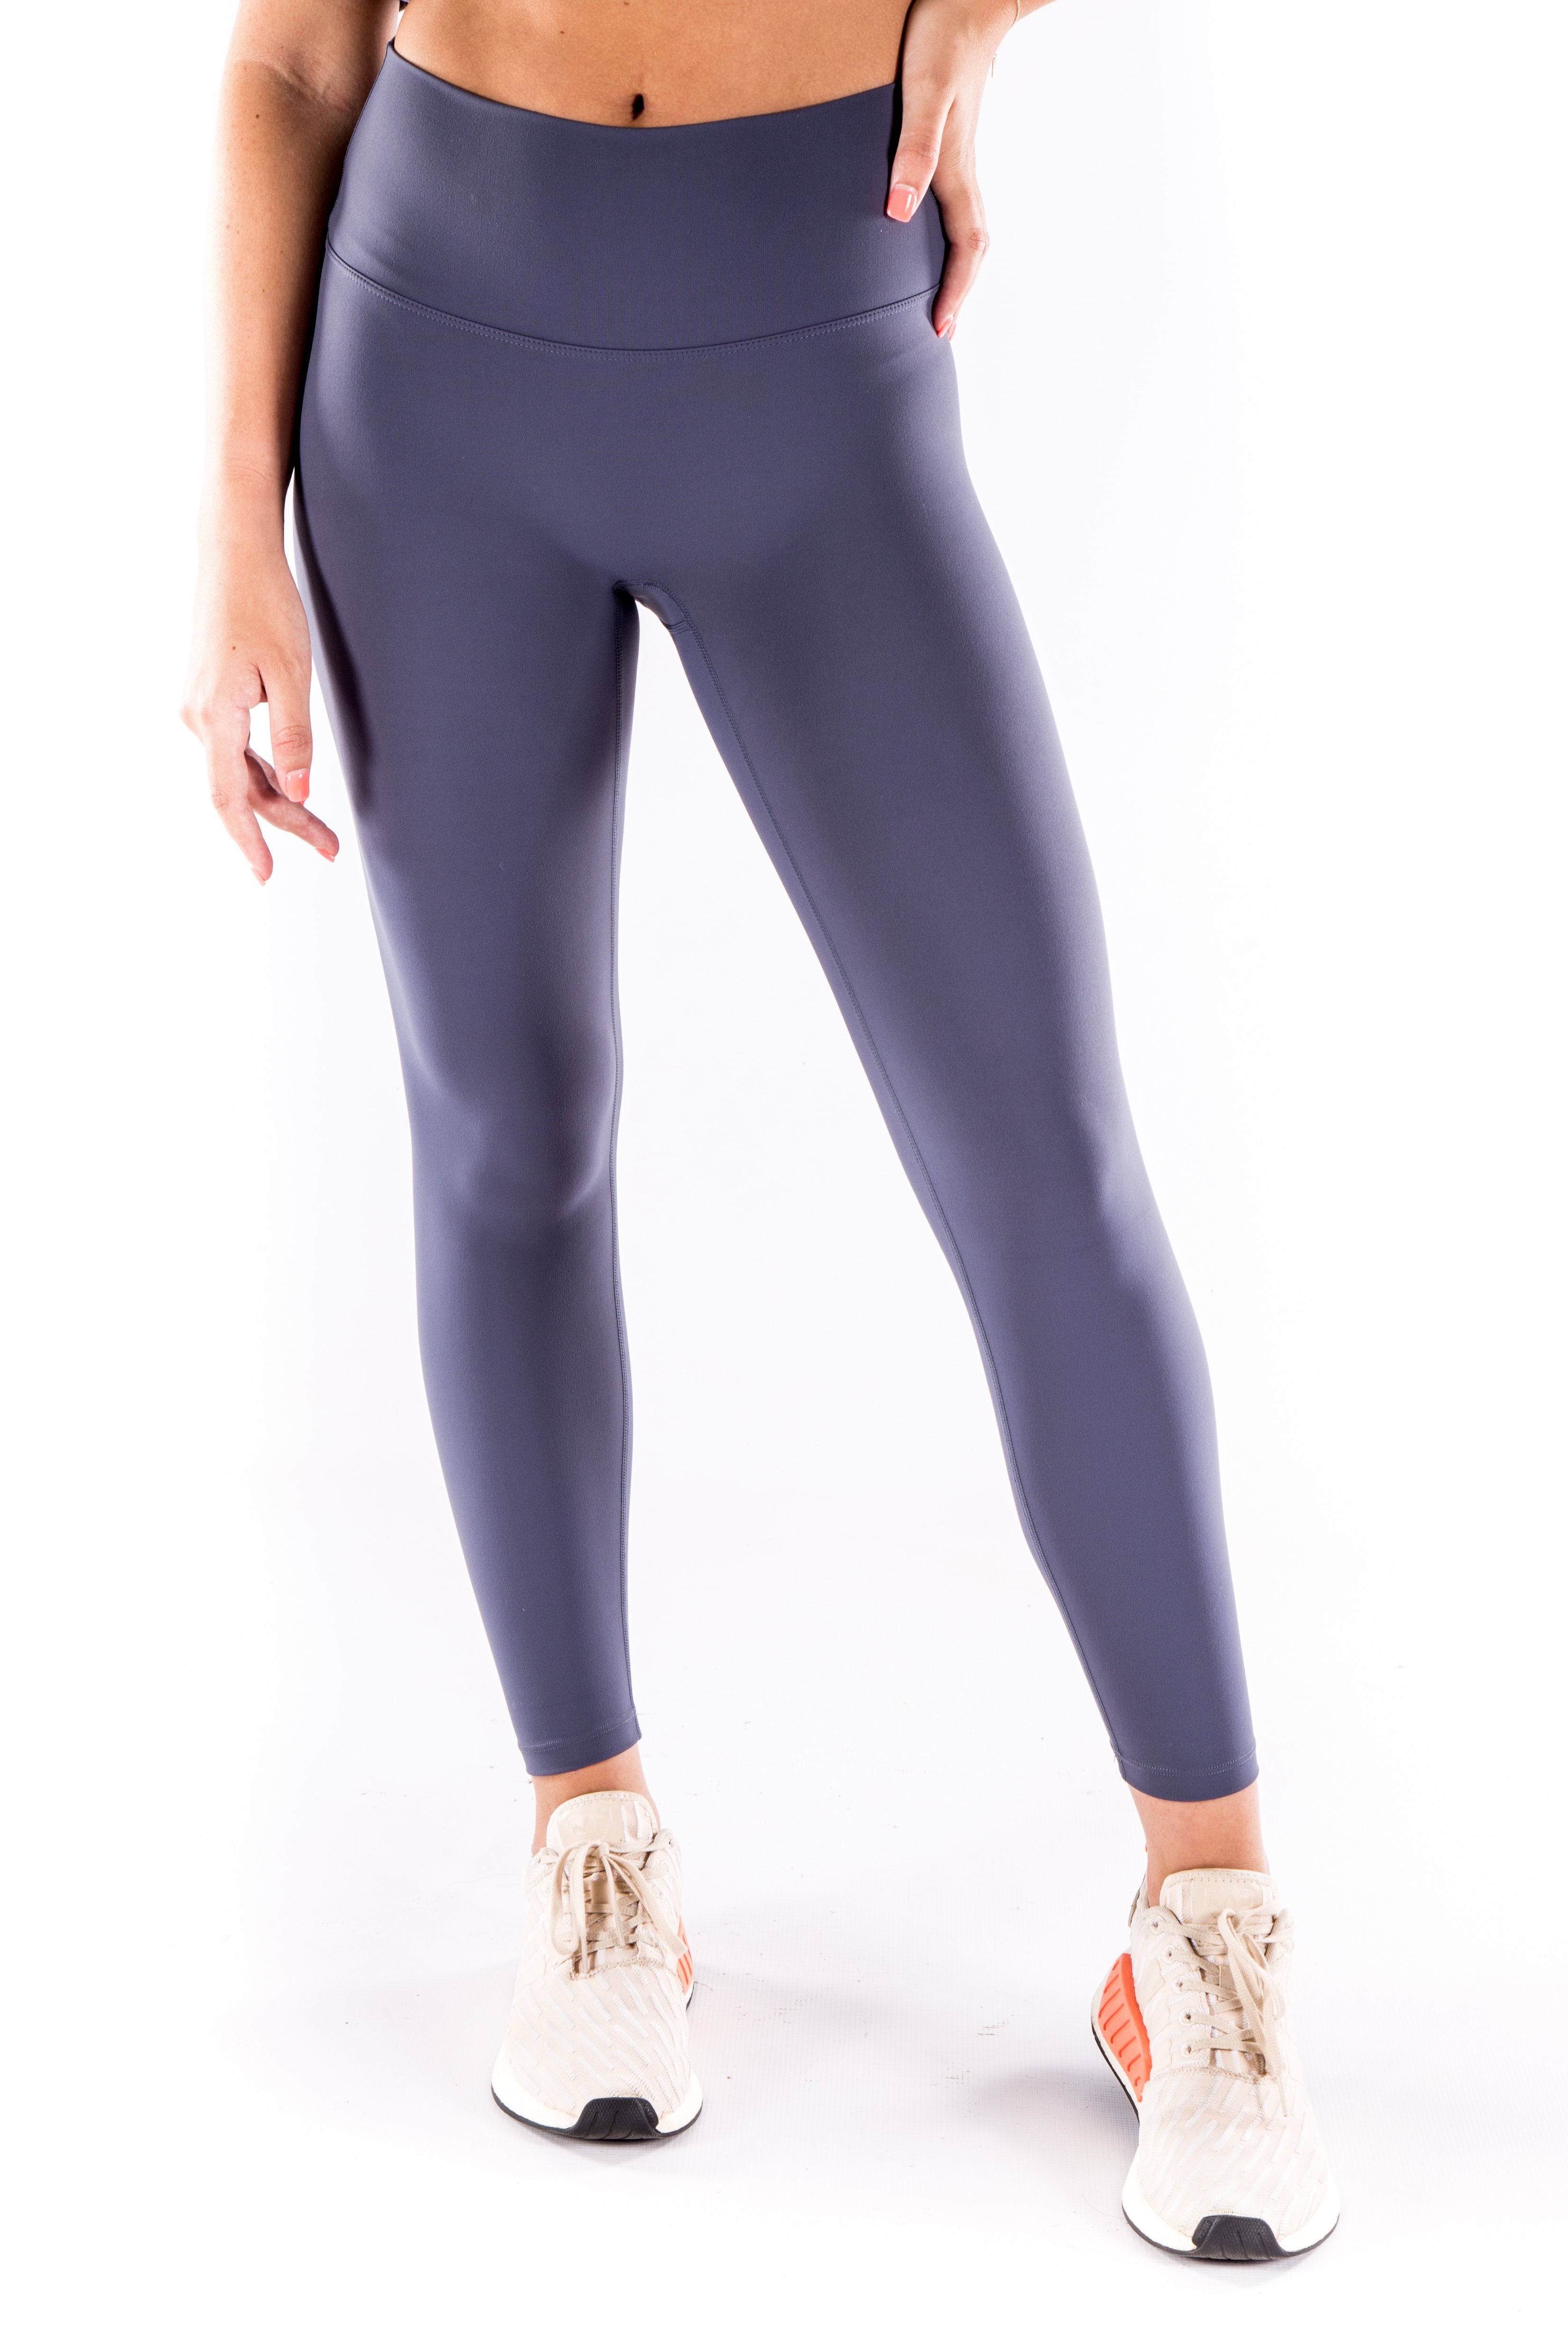 Image of Wonderfit Lulu  - Buttery  soft Yoga Pants- Dove Grey